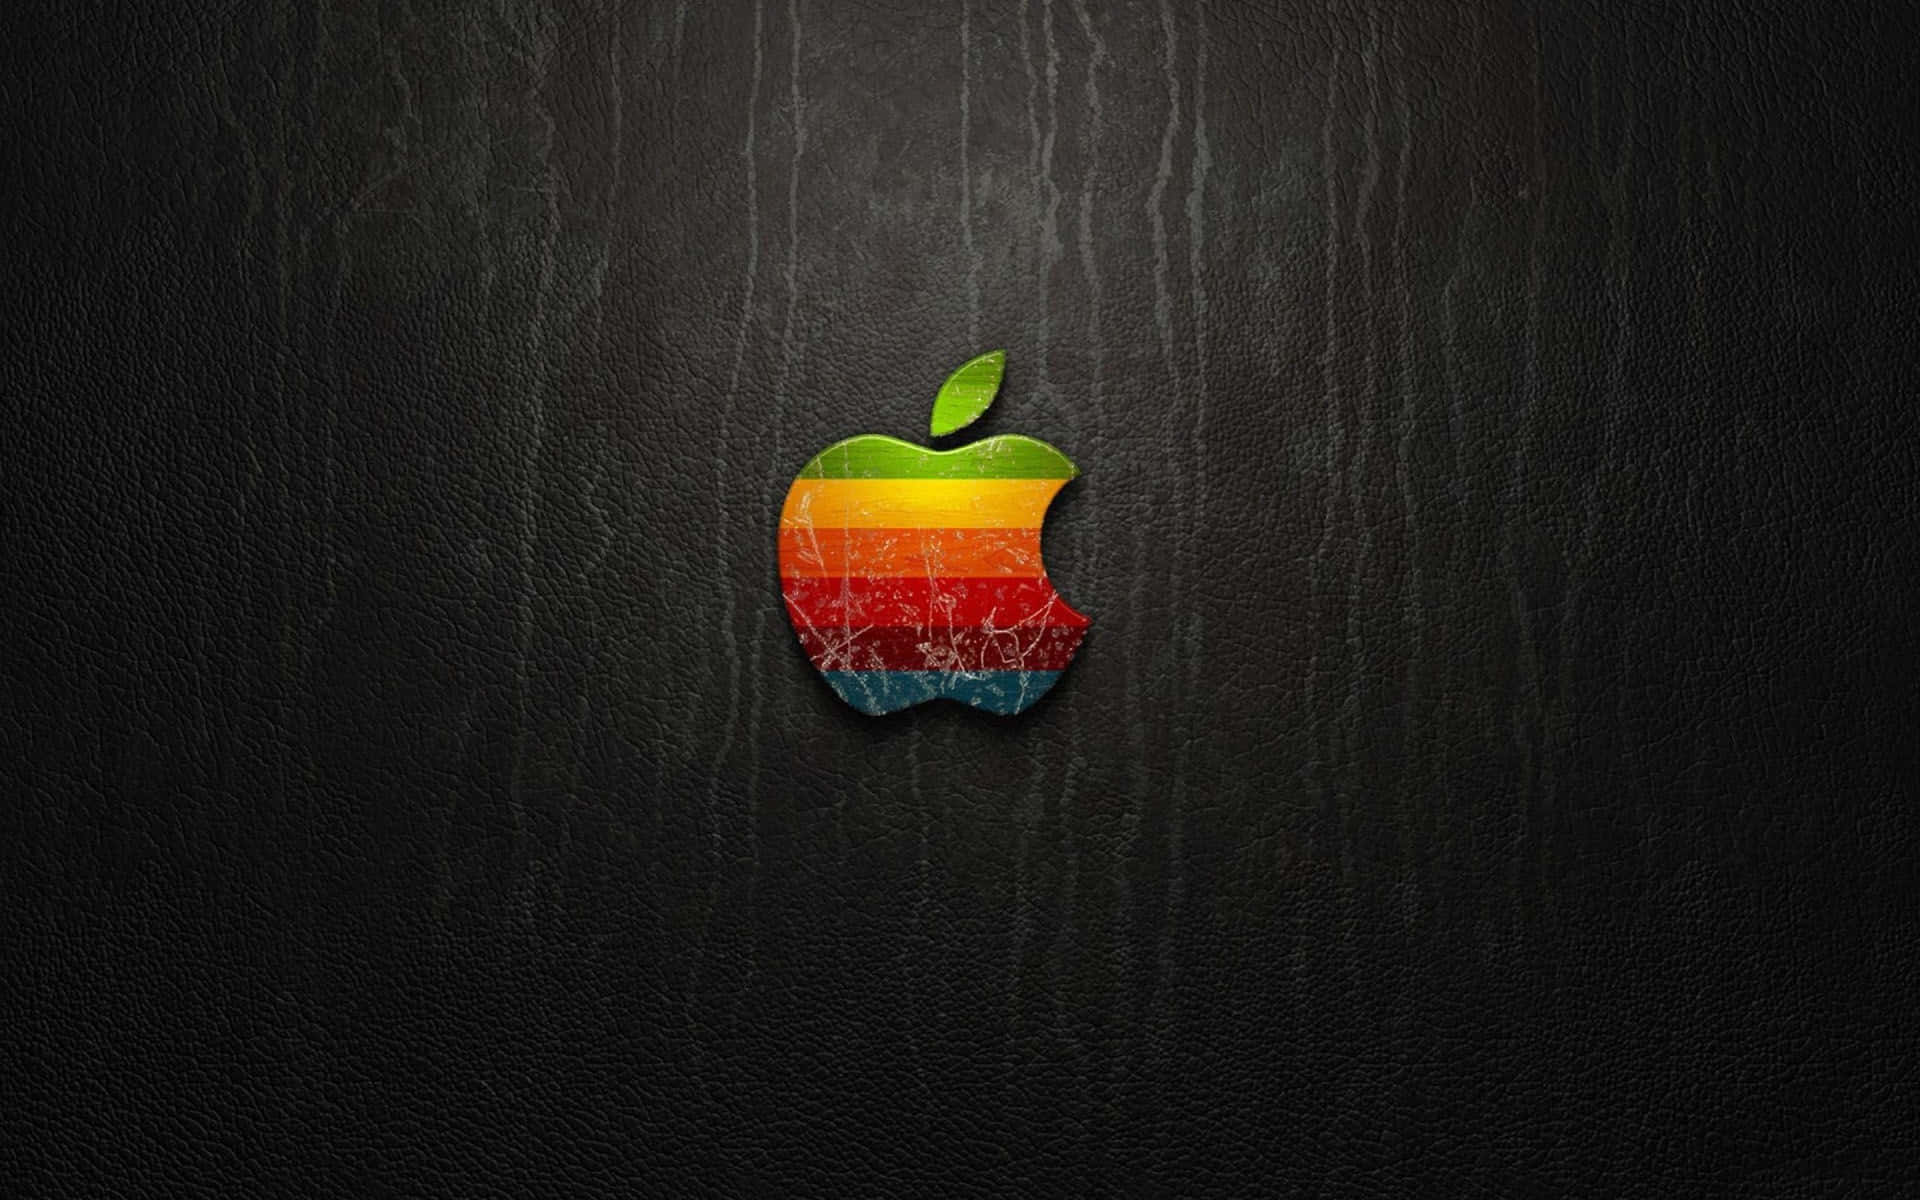 Fondode Pantalla Desgastado Del Logo Hd De Apple.